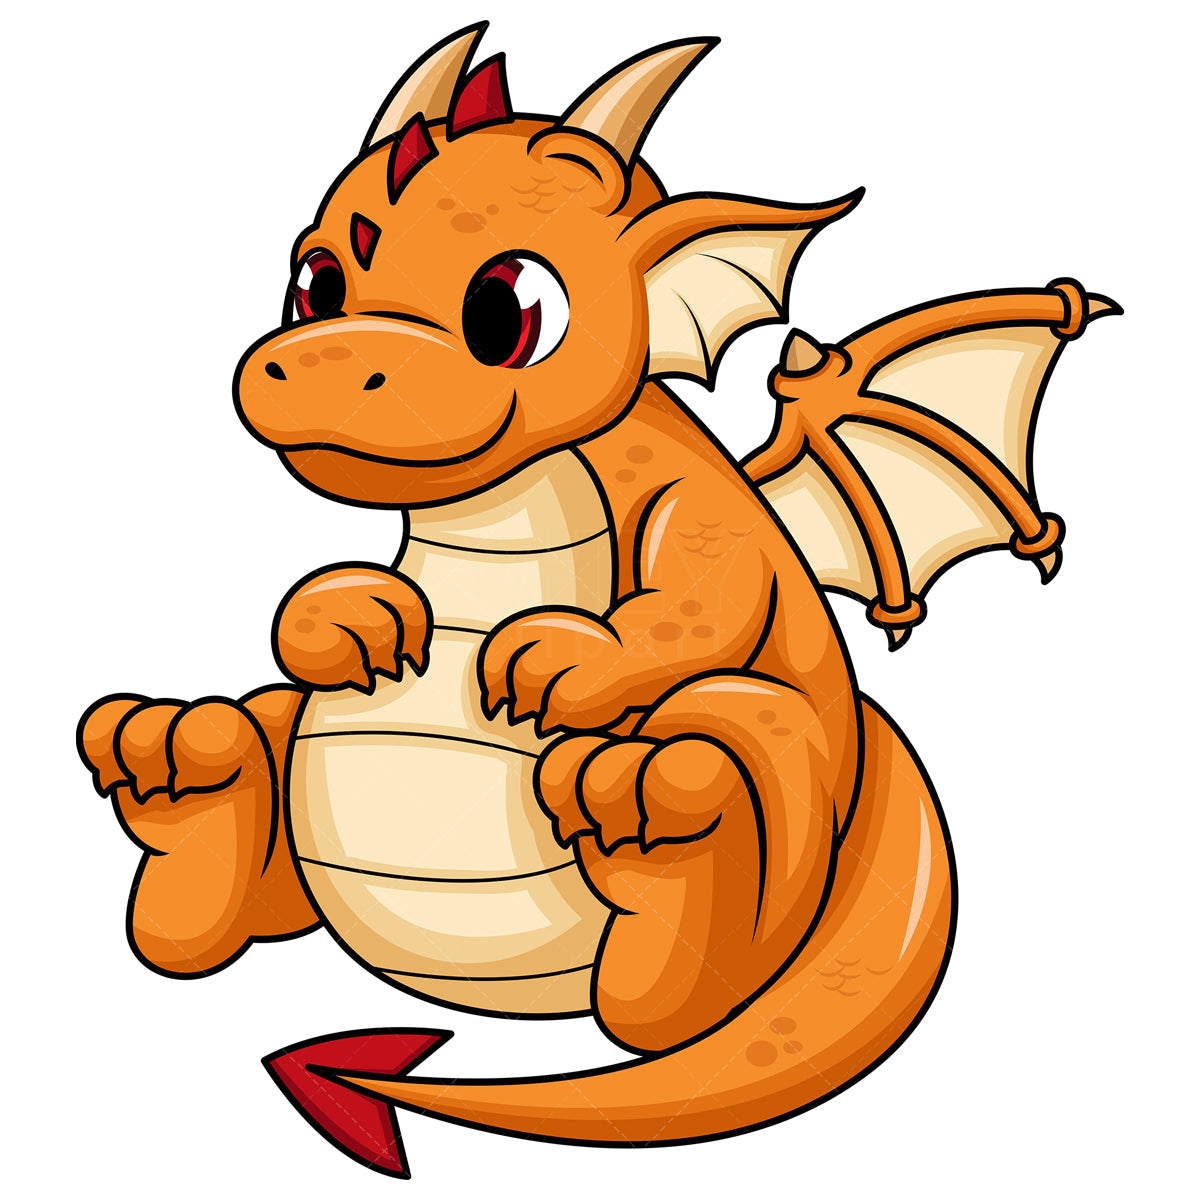 Royalty-free stock vector illustration of an orange chubby dragon.